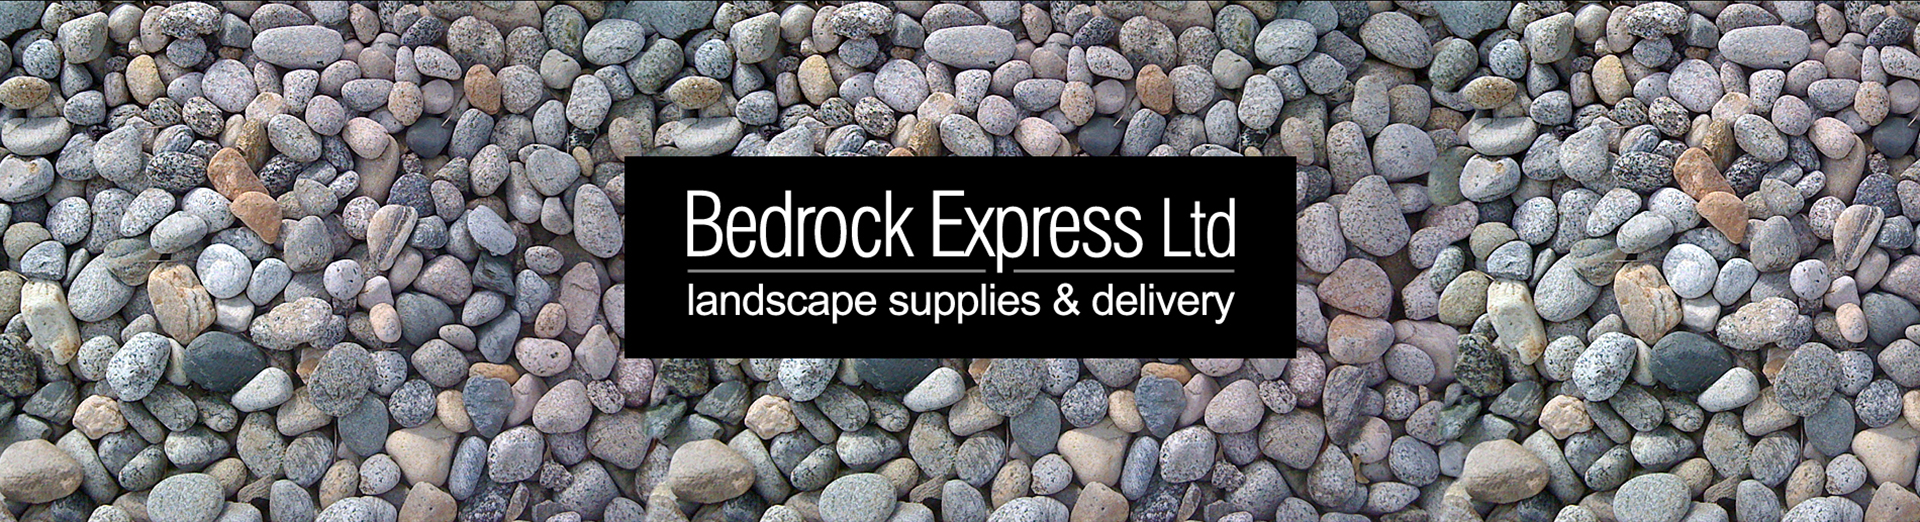 Welcome To Bedrock Express Ltd, Edgewood Landscape Supply Southgate Mi